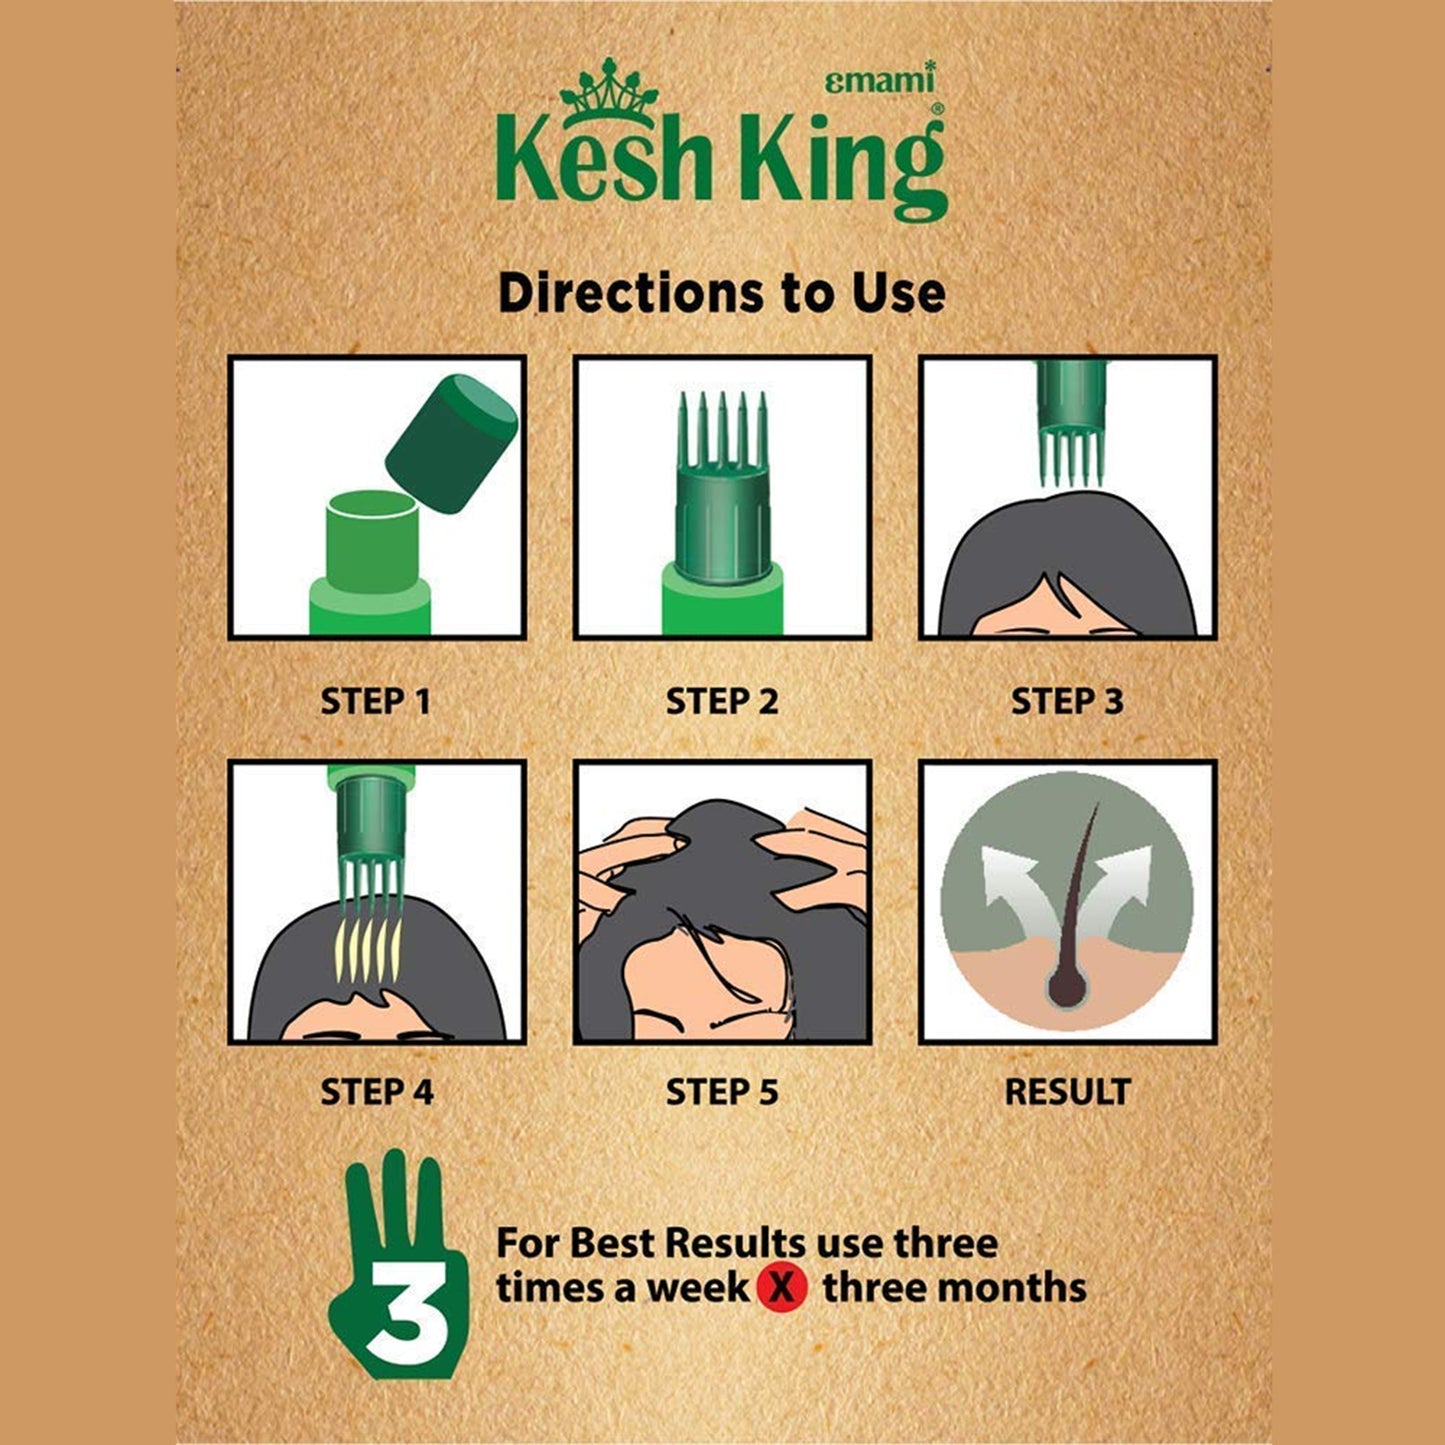 Kesh King Hair Oil, 100ml